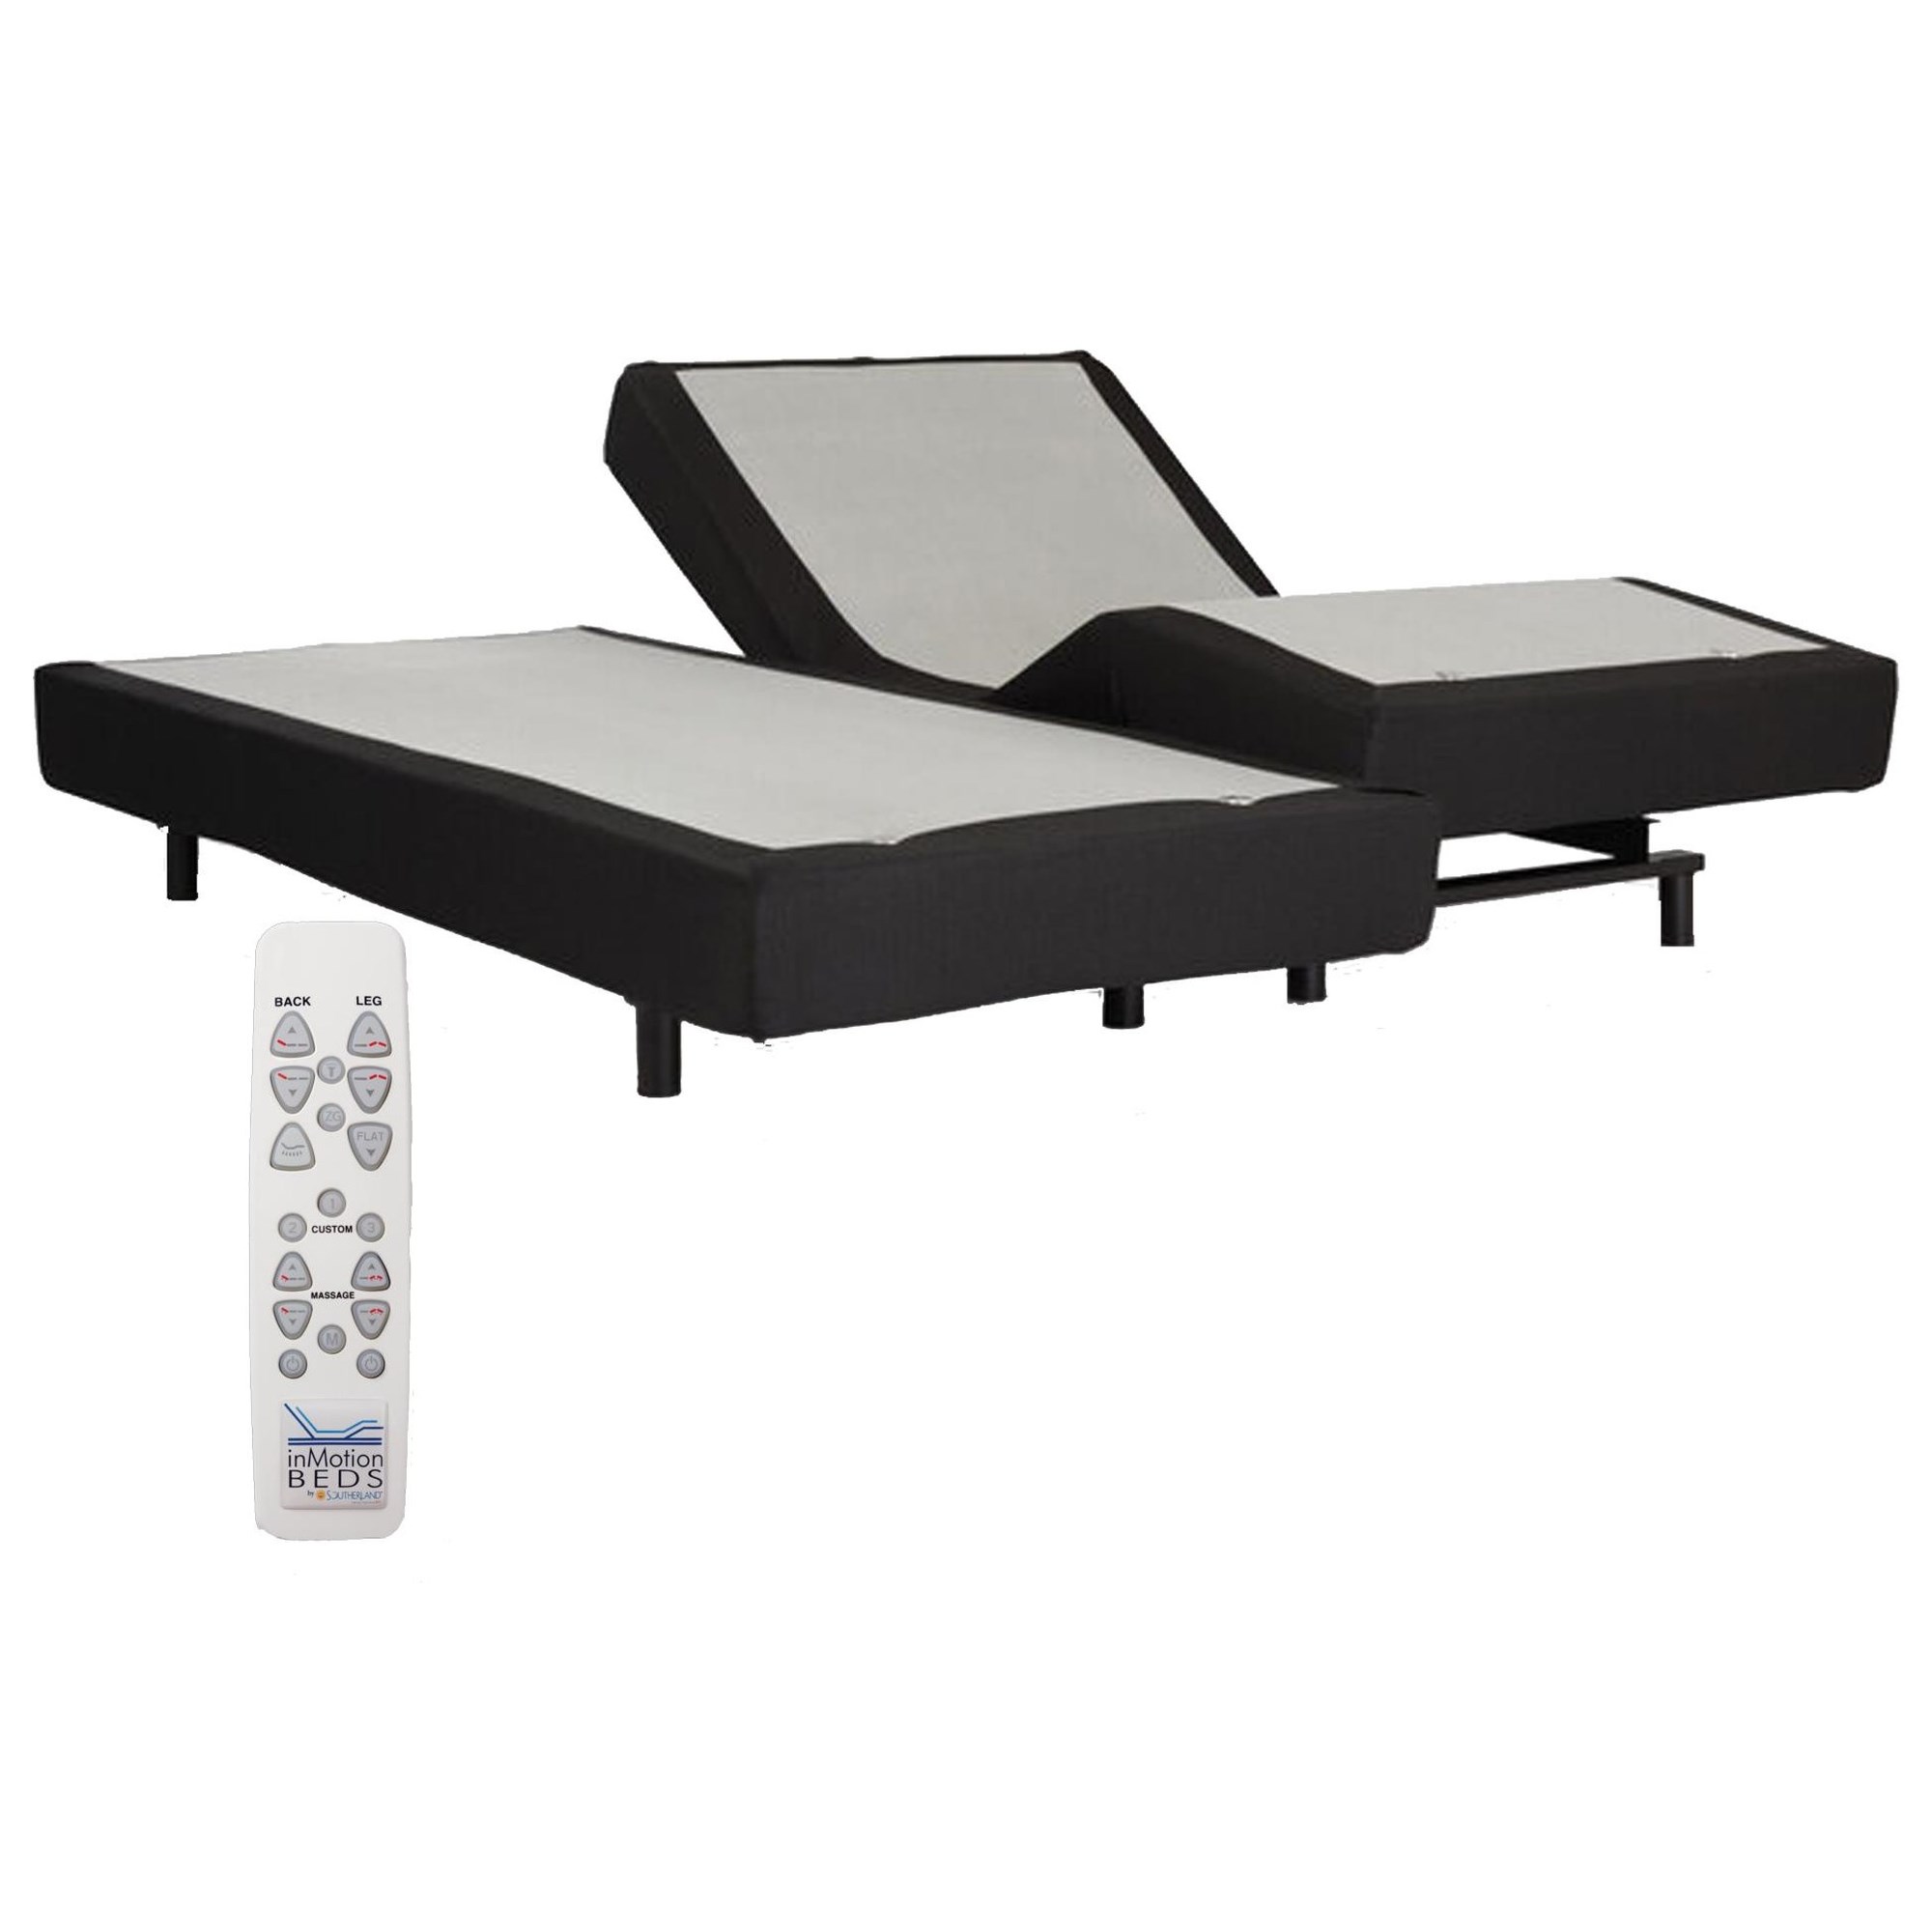 Bed Seat  GMS Rehabilitation